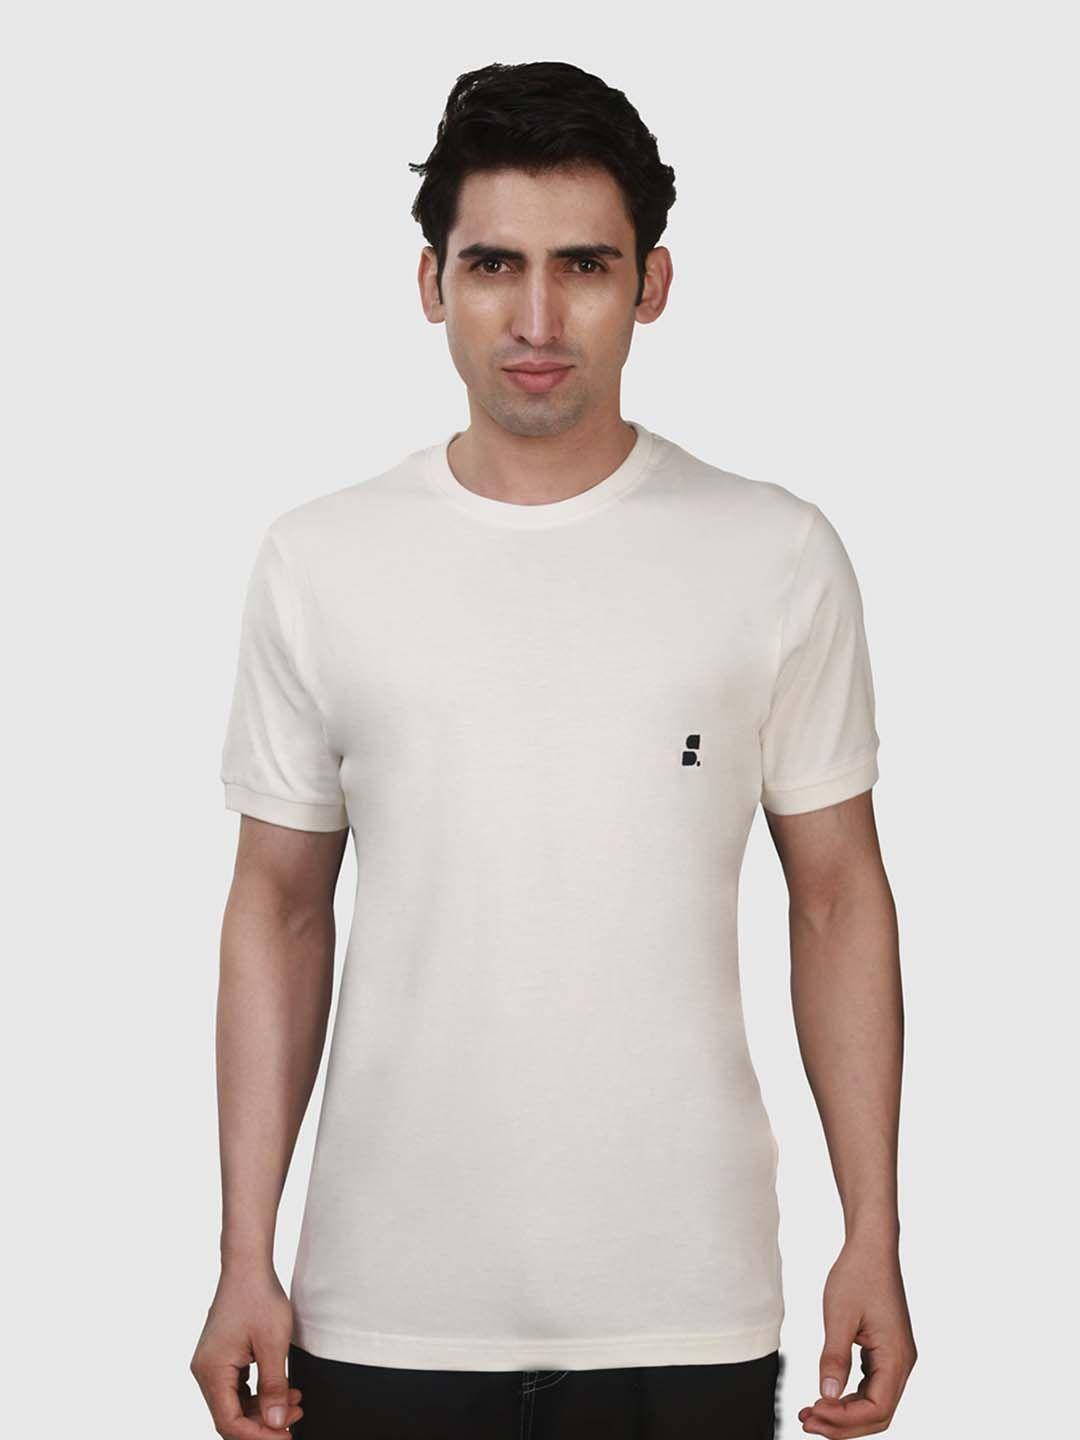 sumiso short sleeves cotton t-shirt